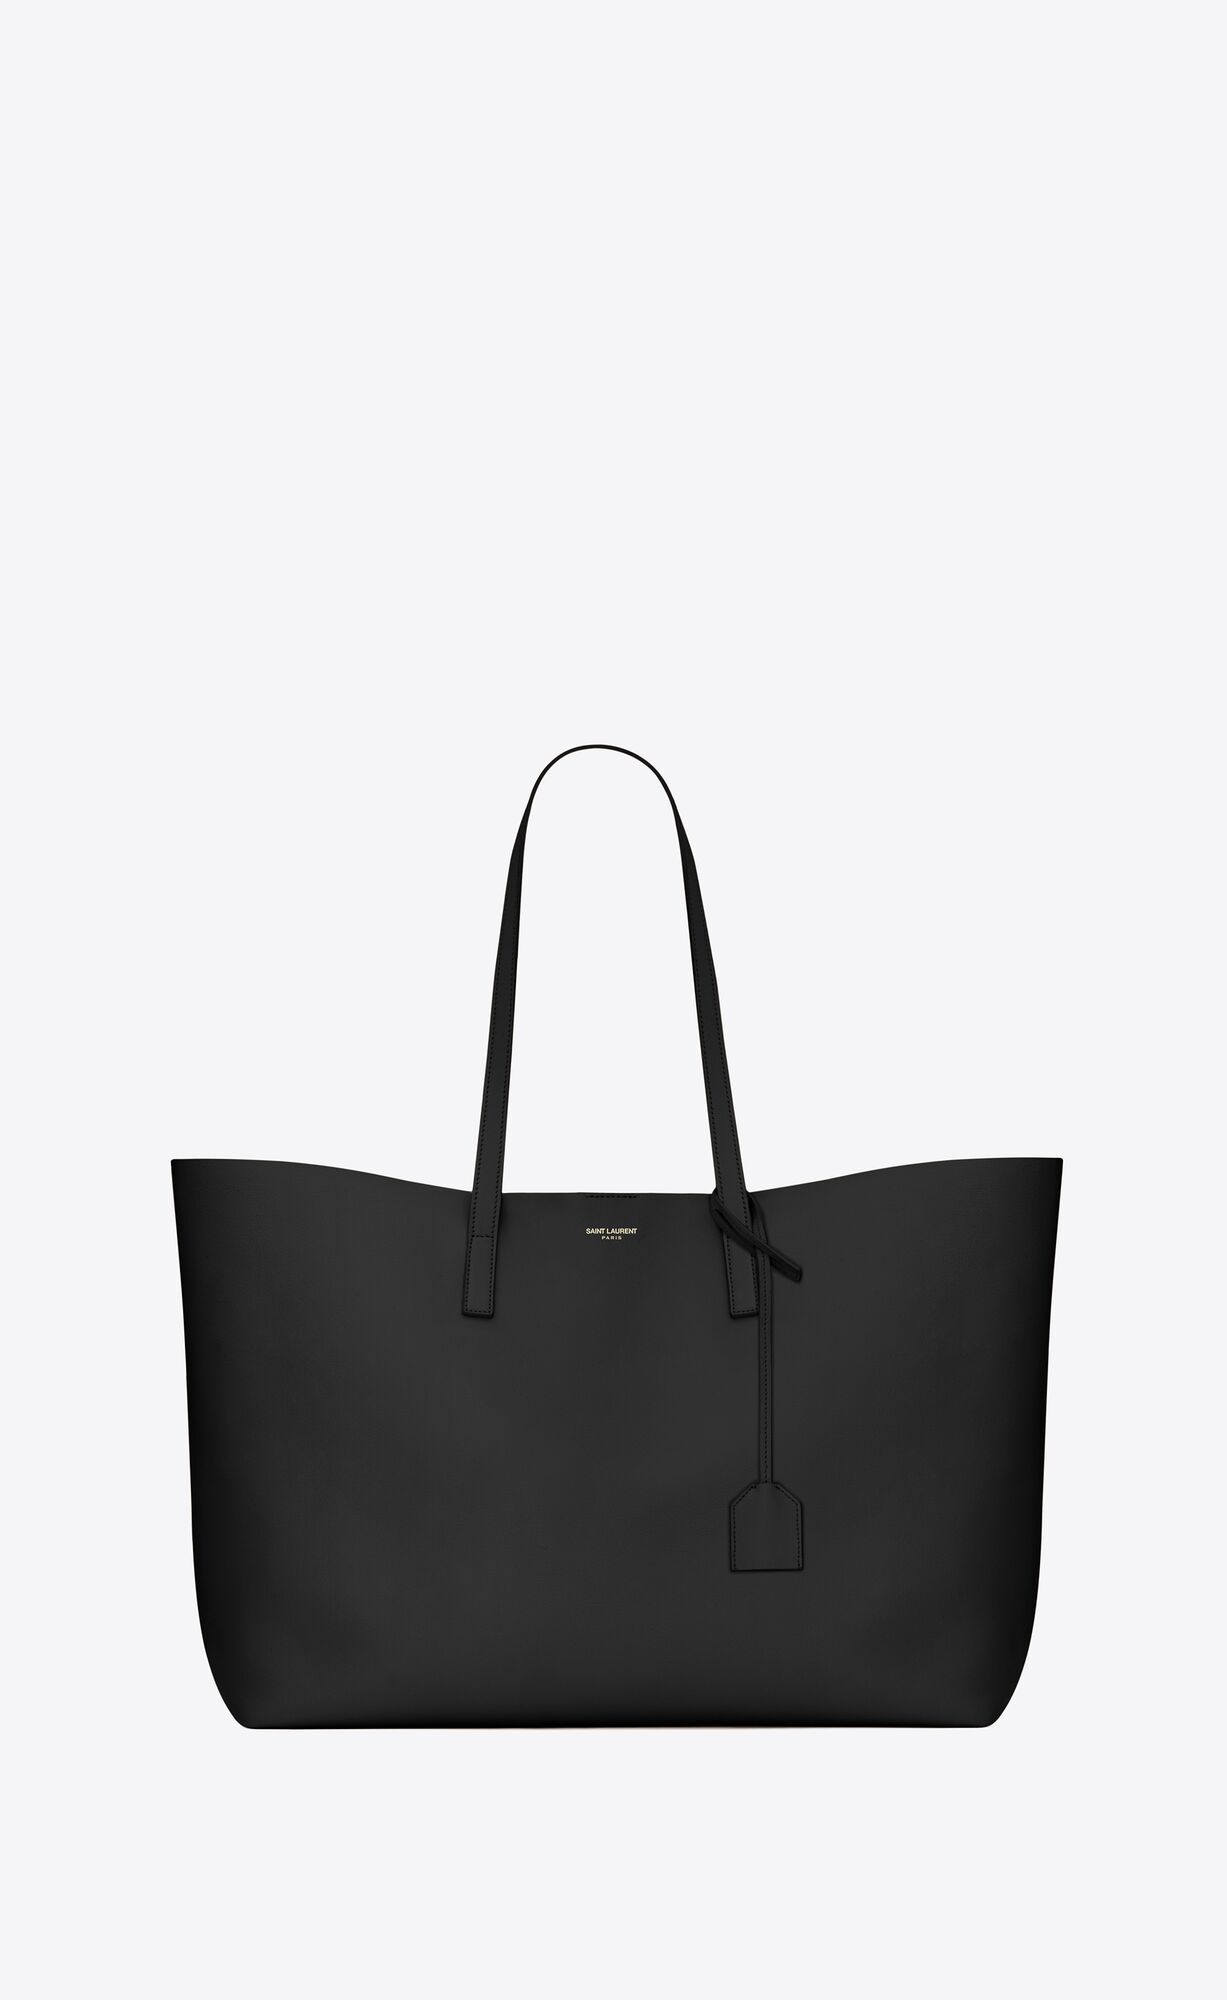 shopping bag saint laurent E/W in supple leather | Saint Laurent | YSL.com | Saint Laurent Inc. (Global)